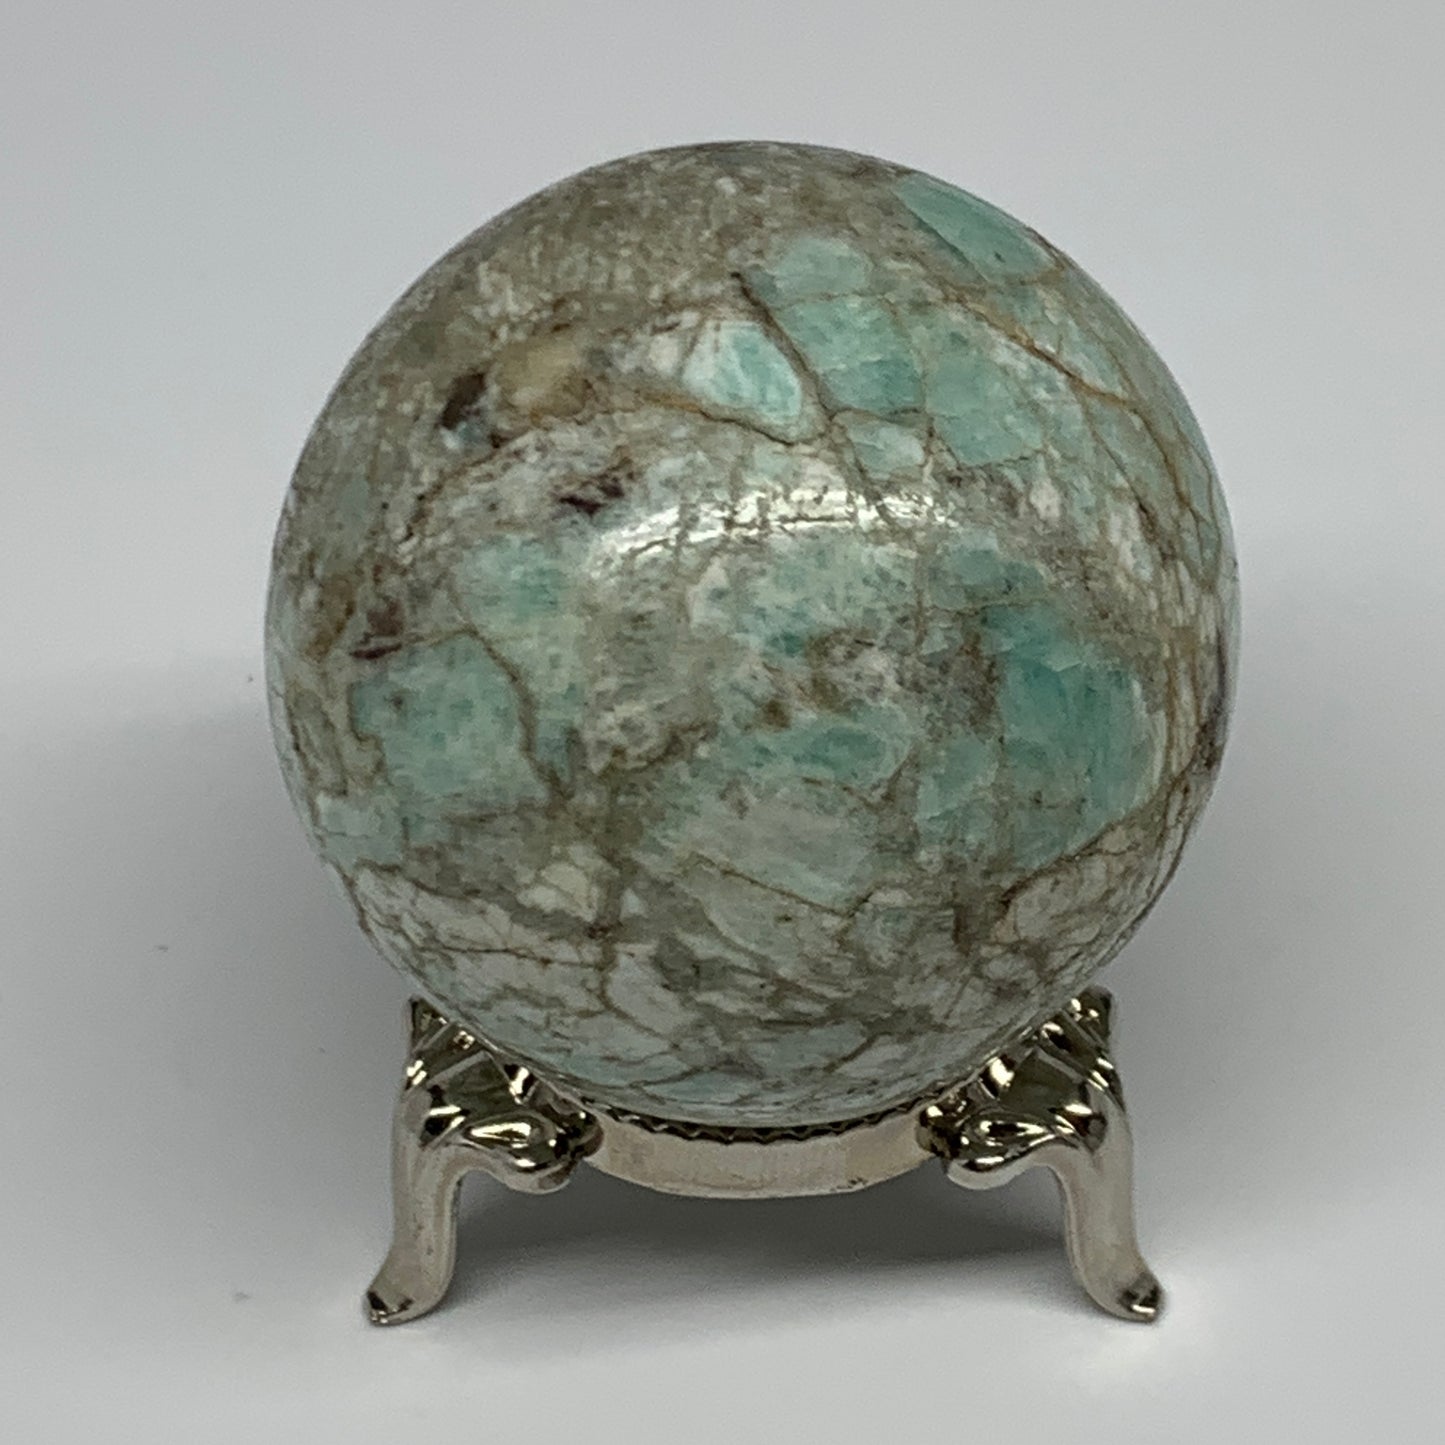 149g, 1.9" Small Amazonite Sphere Ball Gemstone from Madagascar, B15832